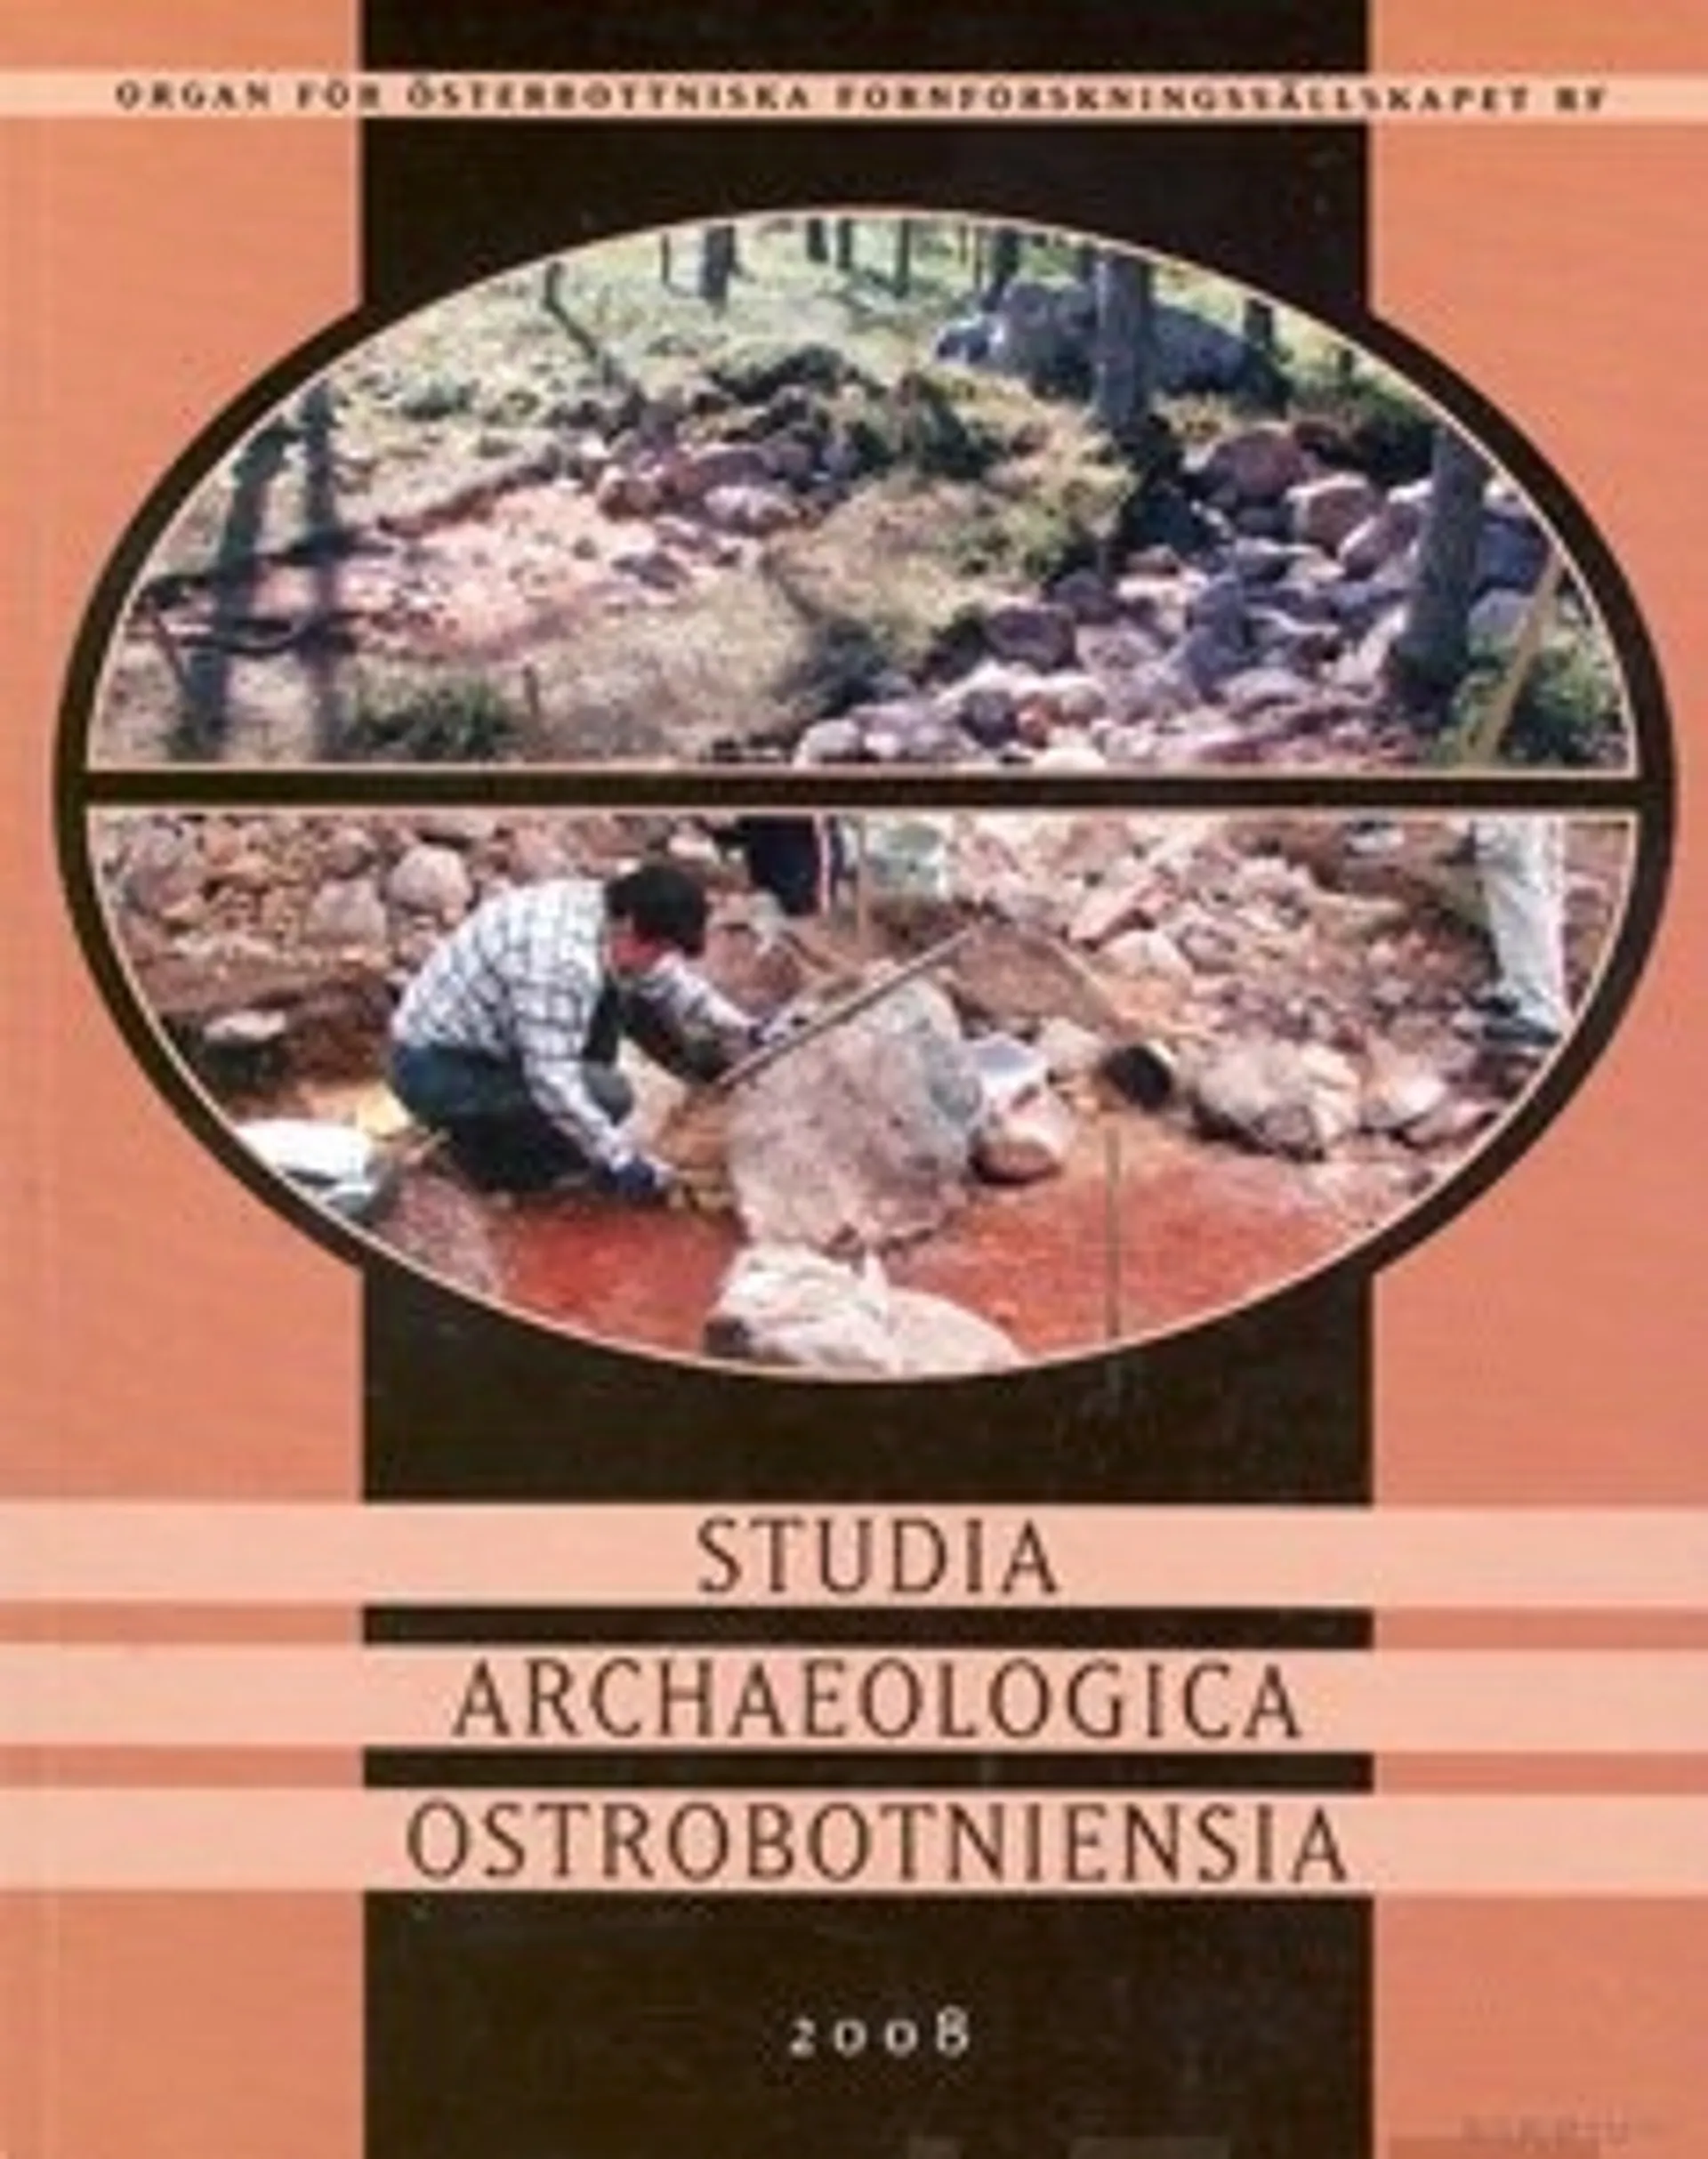 Studia archaeologica Ostrabotniensia 2008